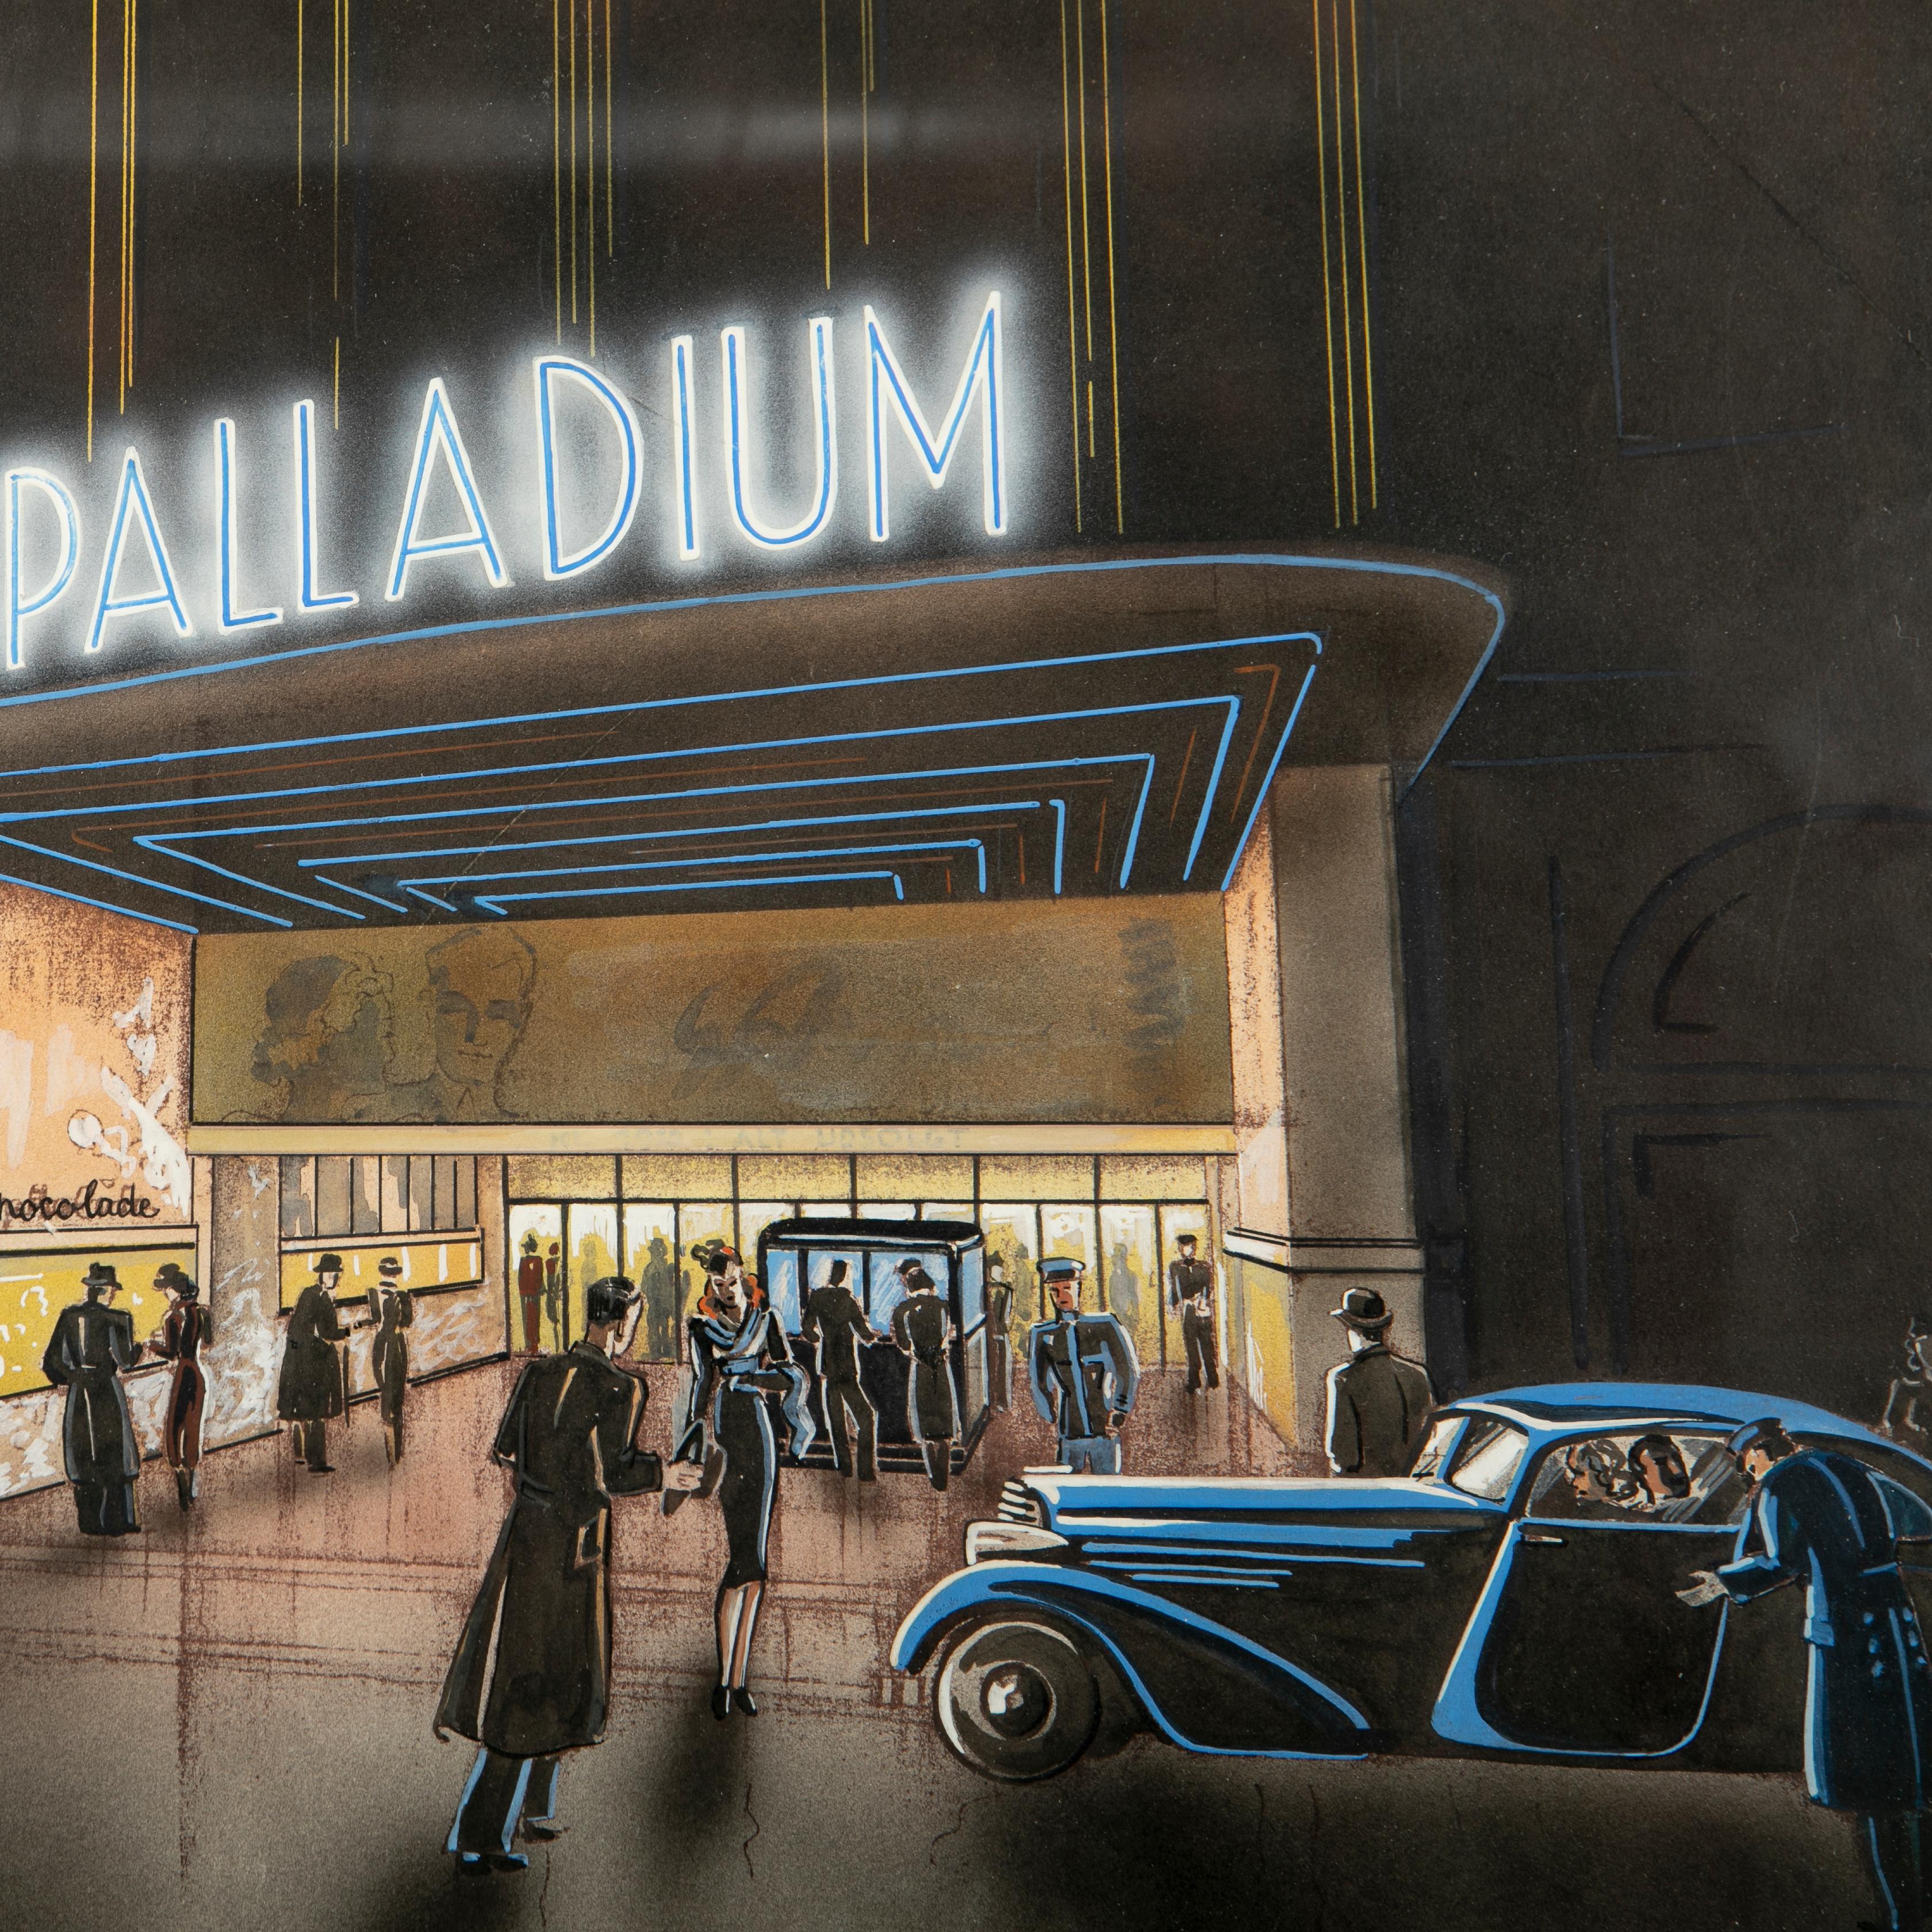 Paper Original Art Deco Poster of the Palladium Cinema by Svend Koppel For Sale